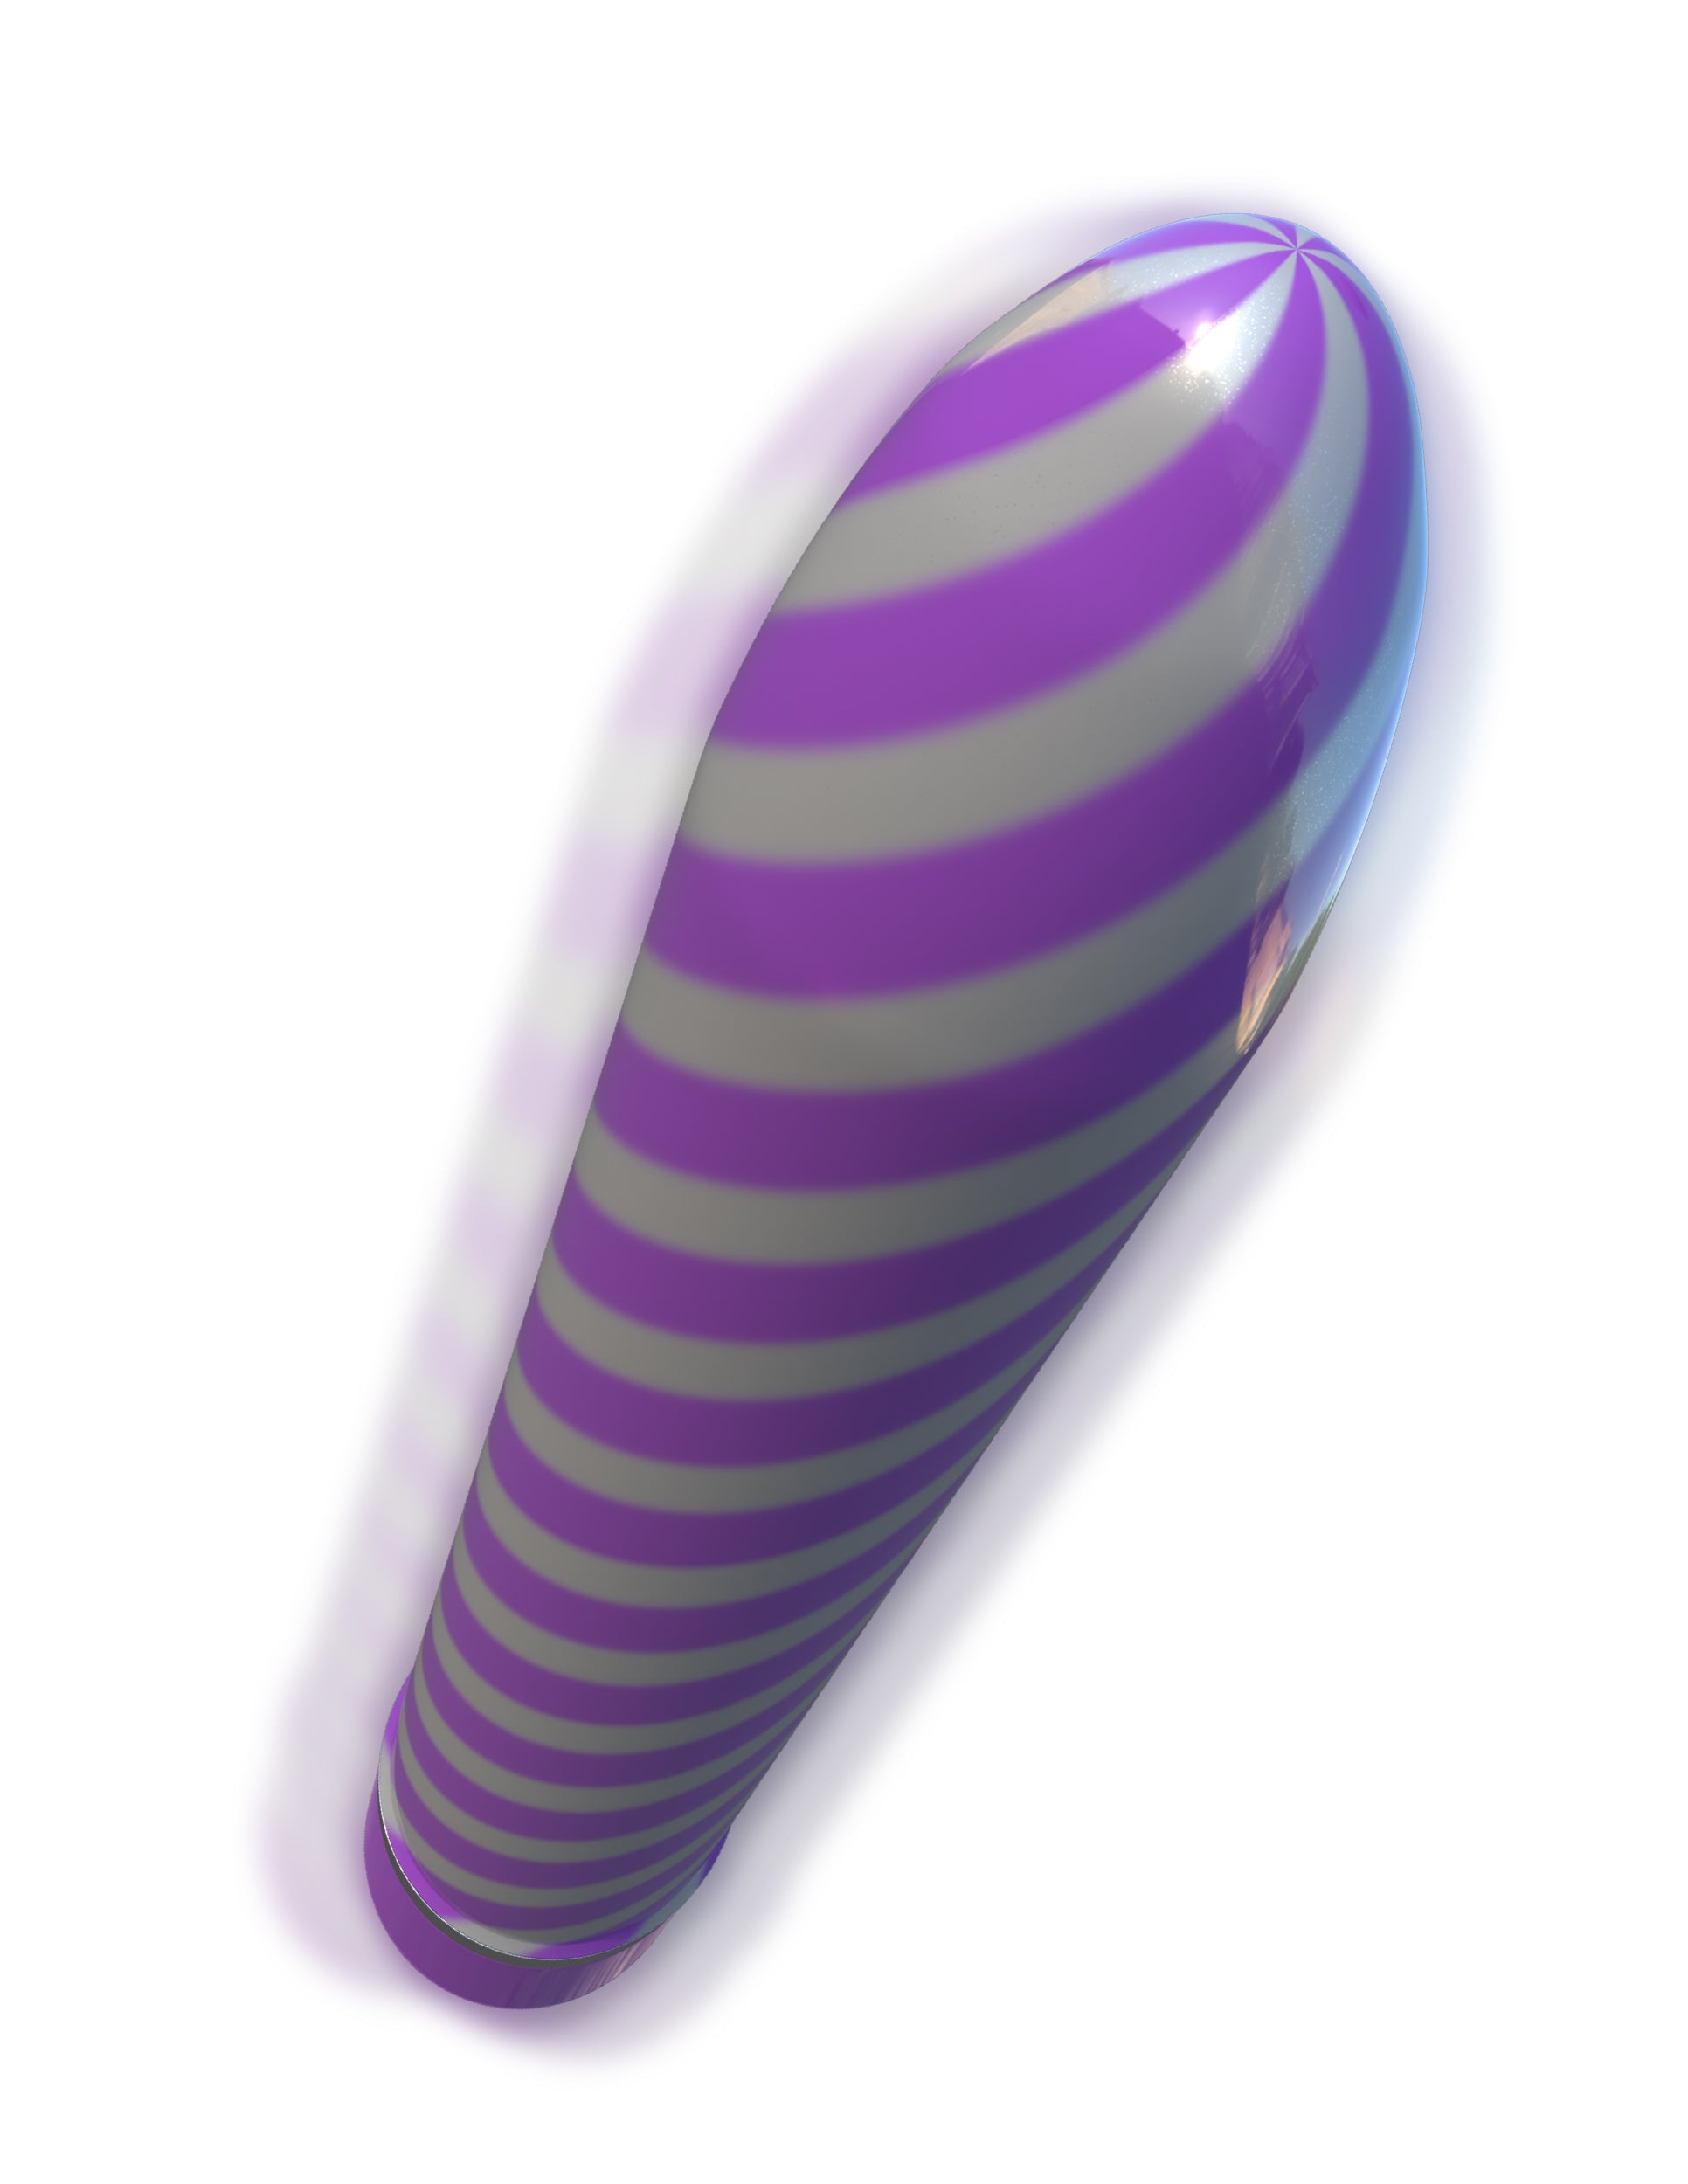 Classic Vibrator - Sweet Swirl, Pipedream Purple